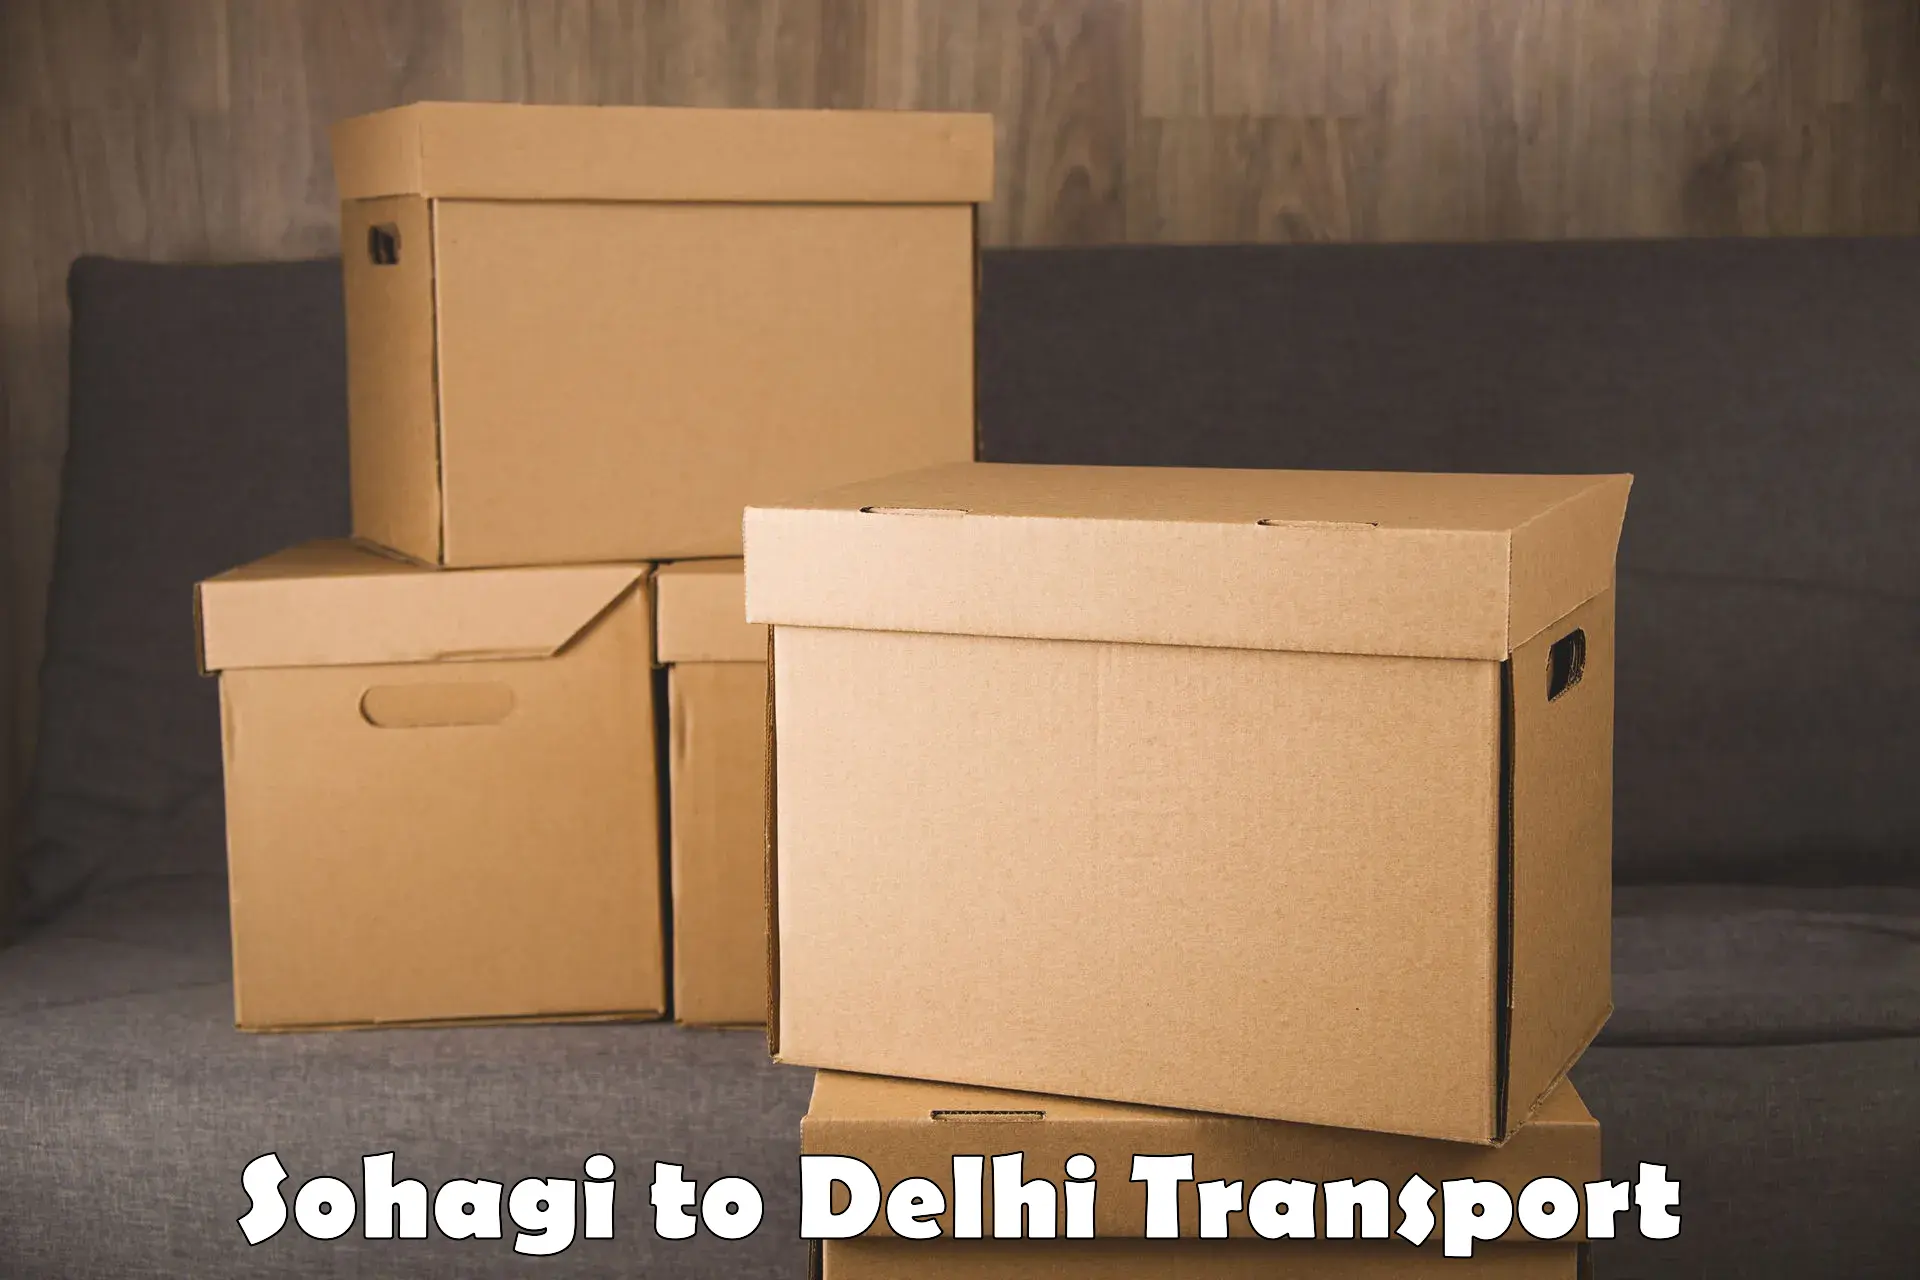 Commercial transport service Sohagi to East Delhi